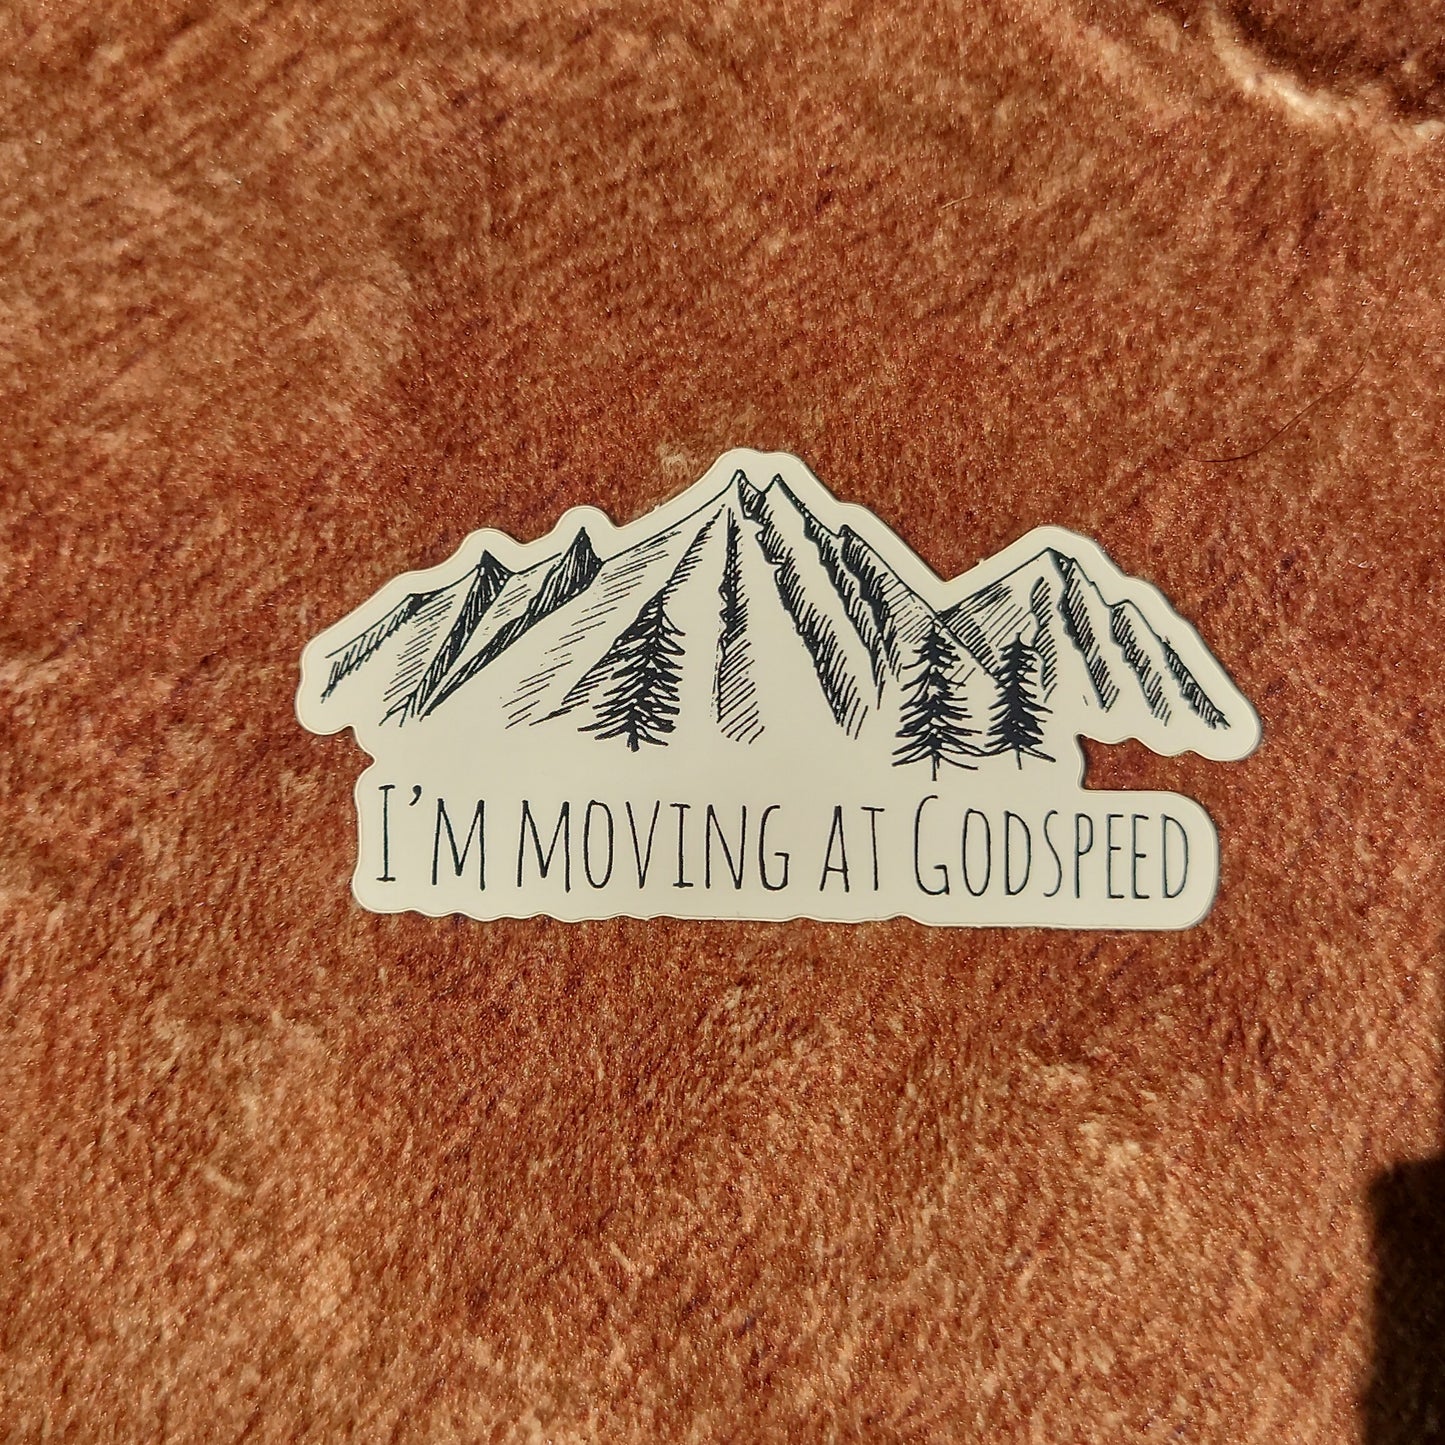 I'm moving at Godspeed